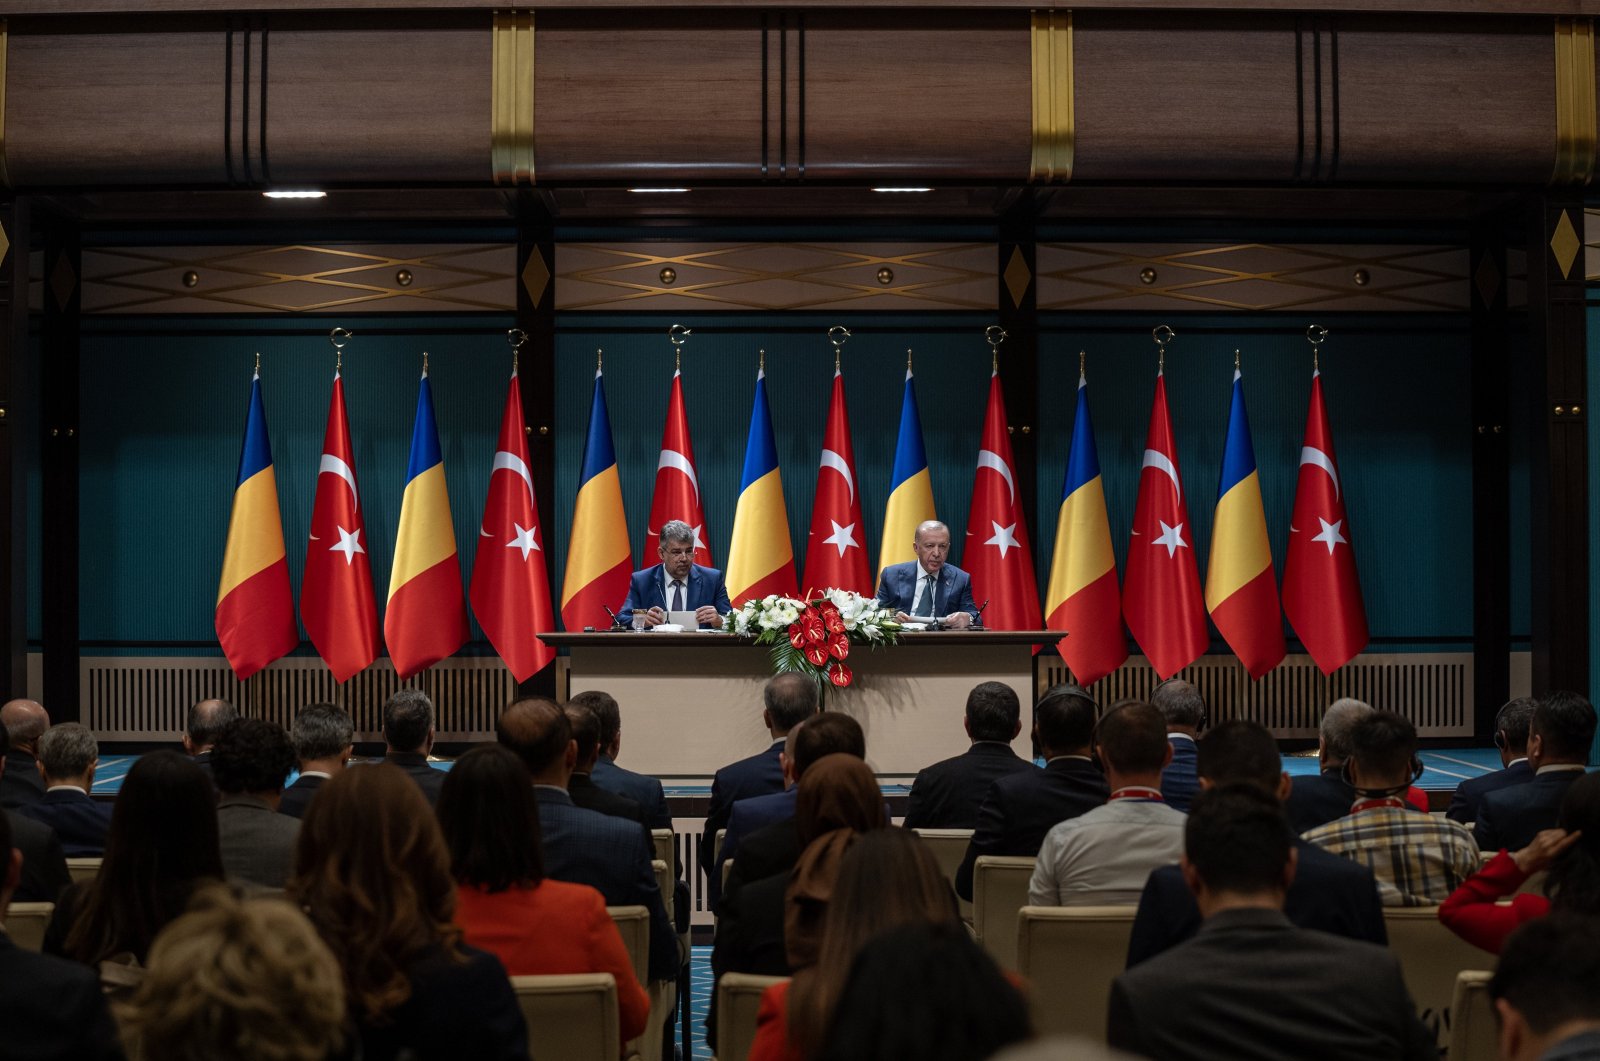 Türkiye, Romania aim for $15B in bilateral trade volume: Erdoğan